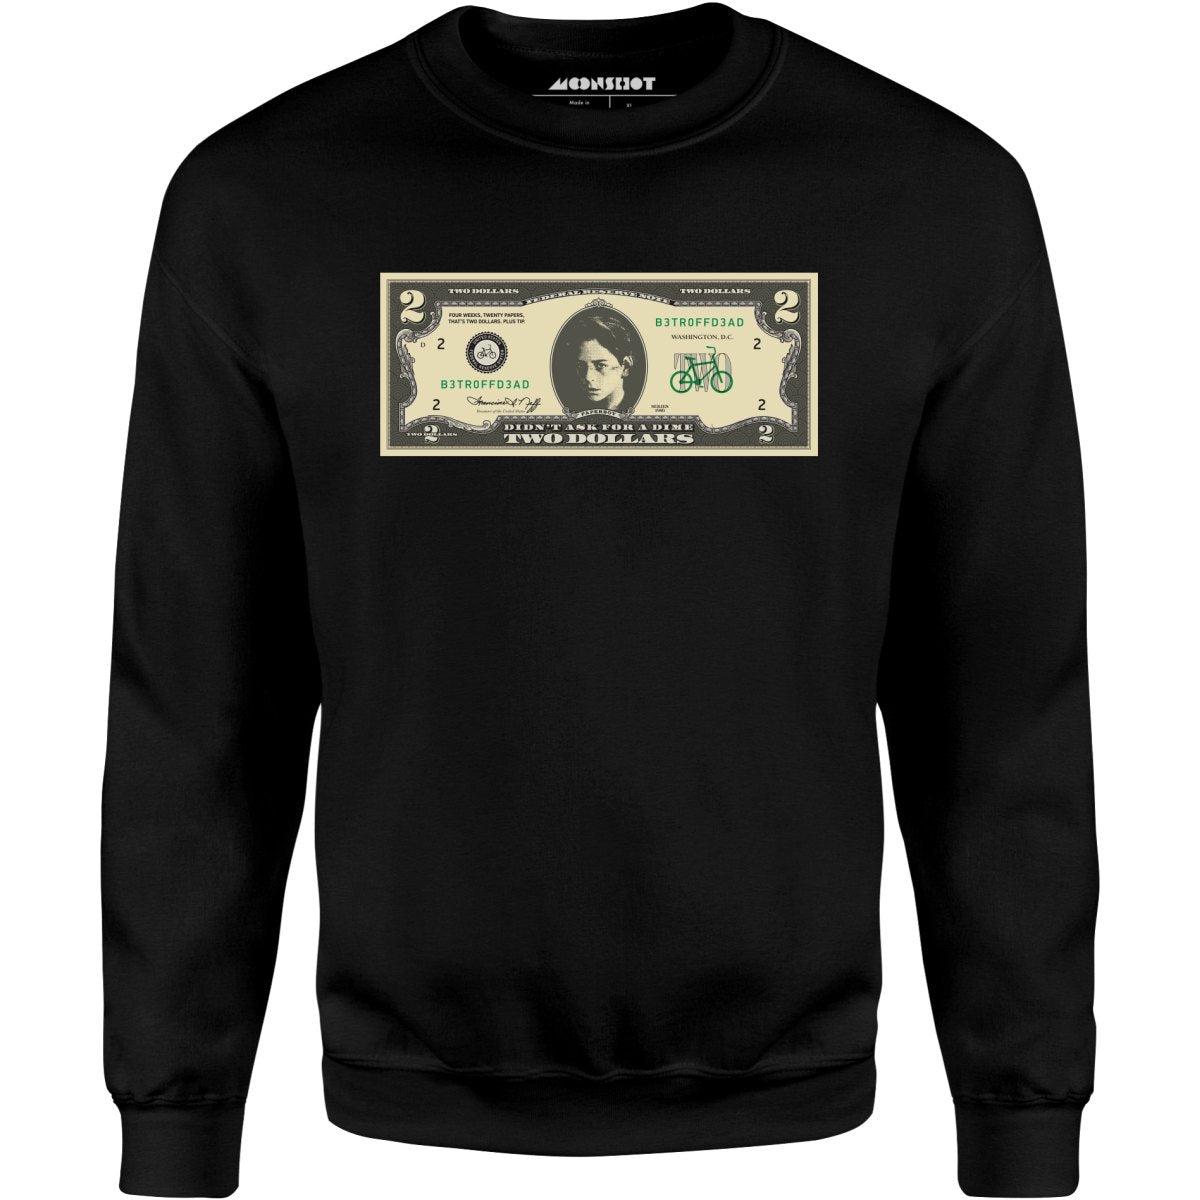 Johnny Two Dollar Bill Parody - Better Off Dead - Unisex Sweatshirt